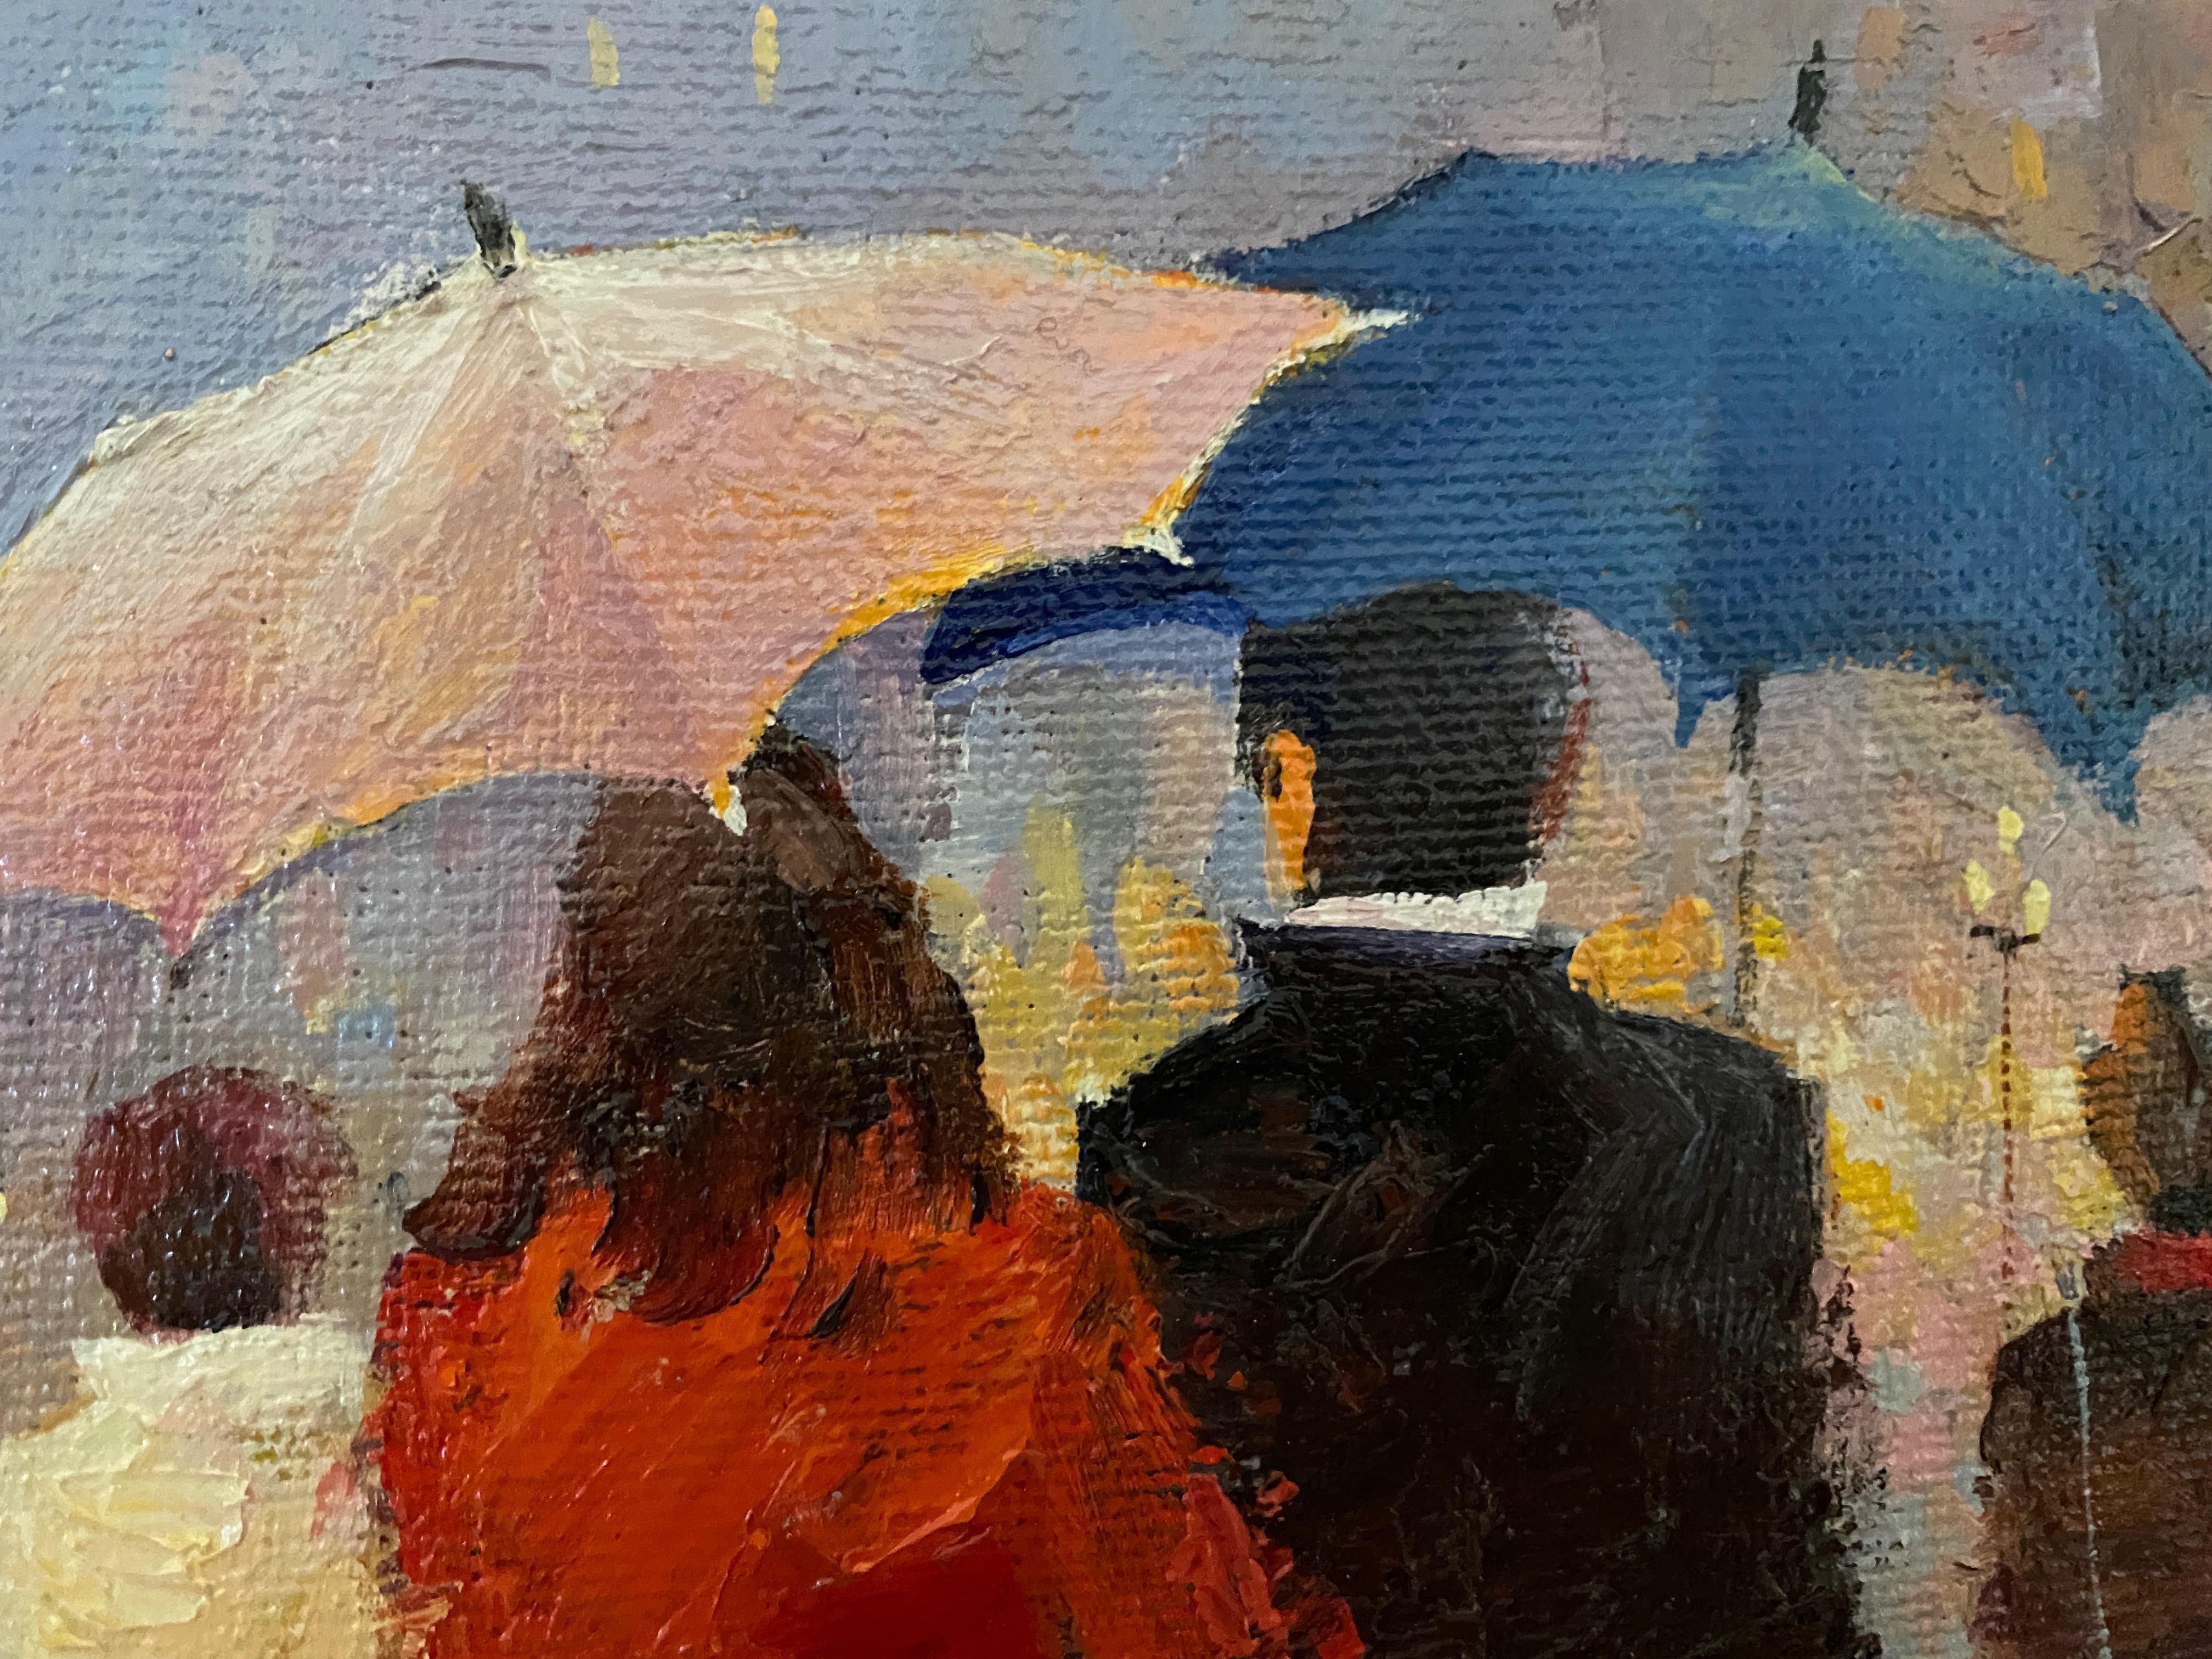 Rainy day. Oil on canvas. Impressionistic colorful street scene. 4